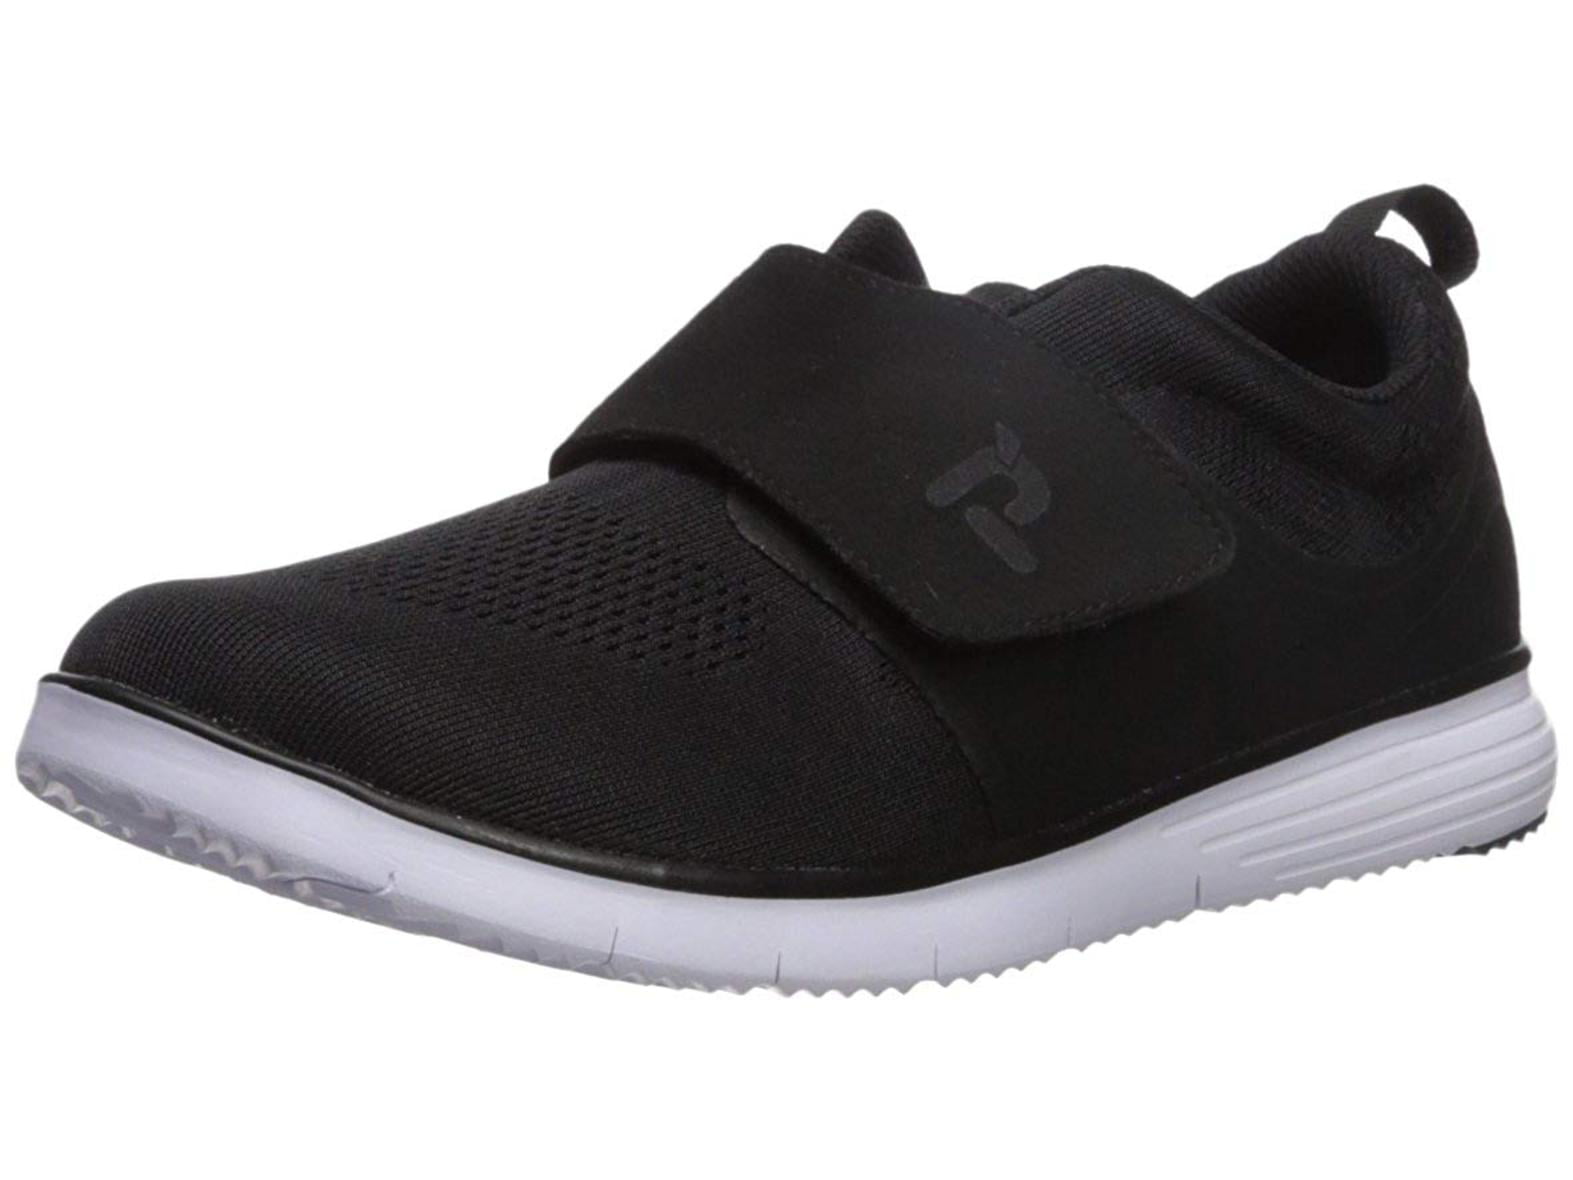 Propet - Propét Women's Travelfit Strap Walking Shoe, Black, Size 6.5 ...